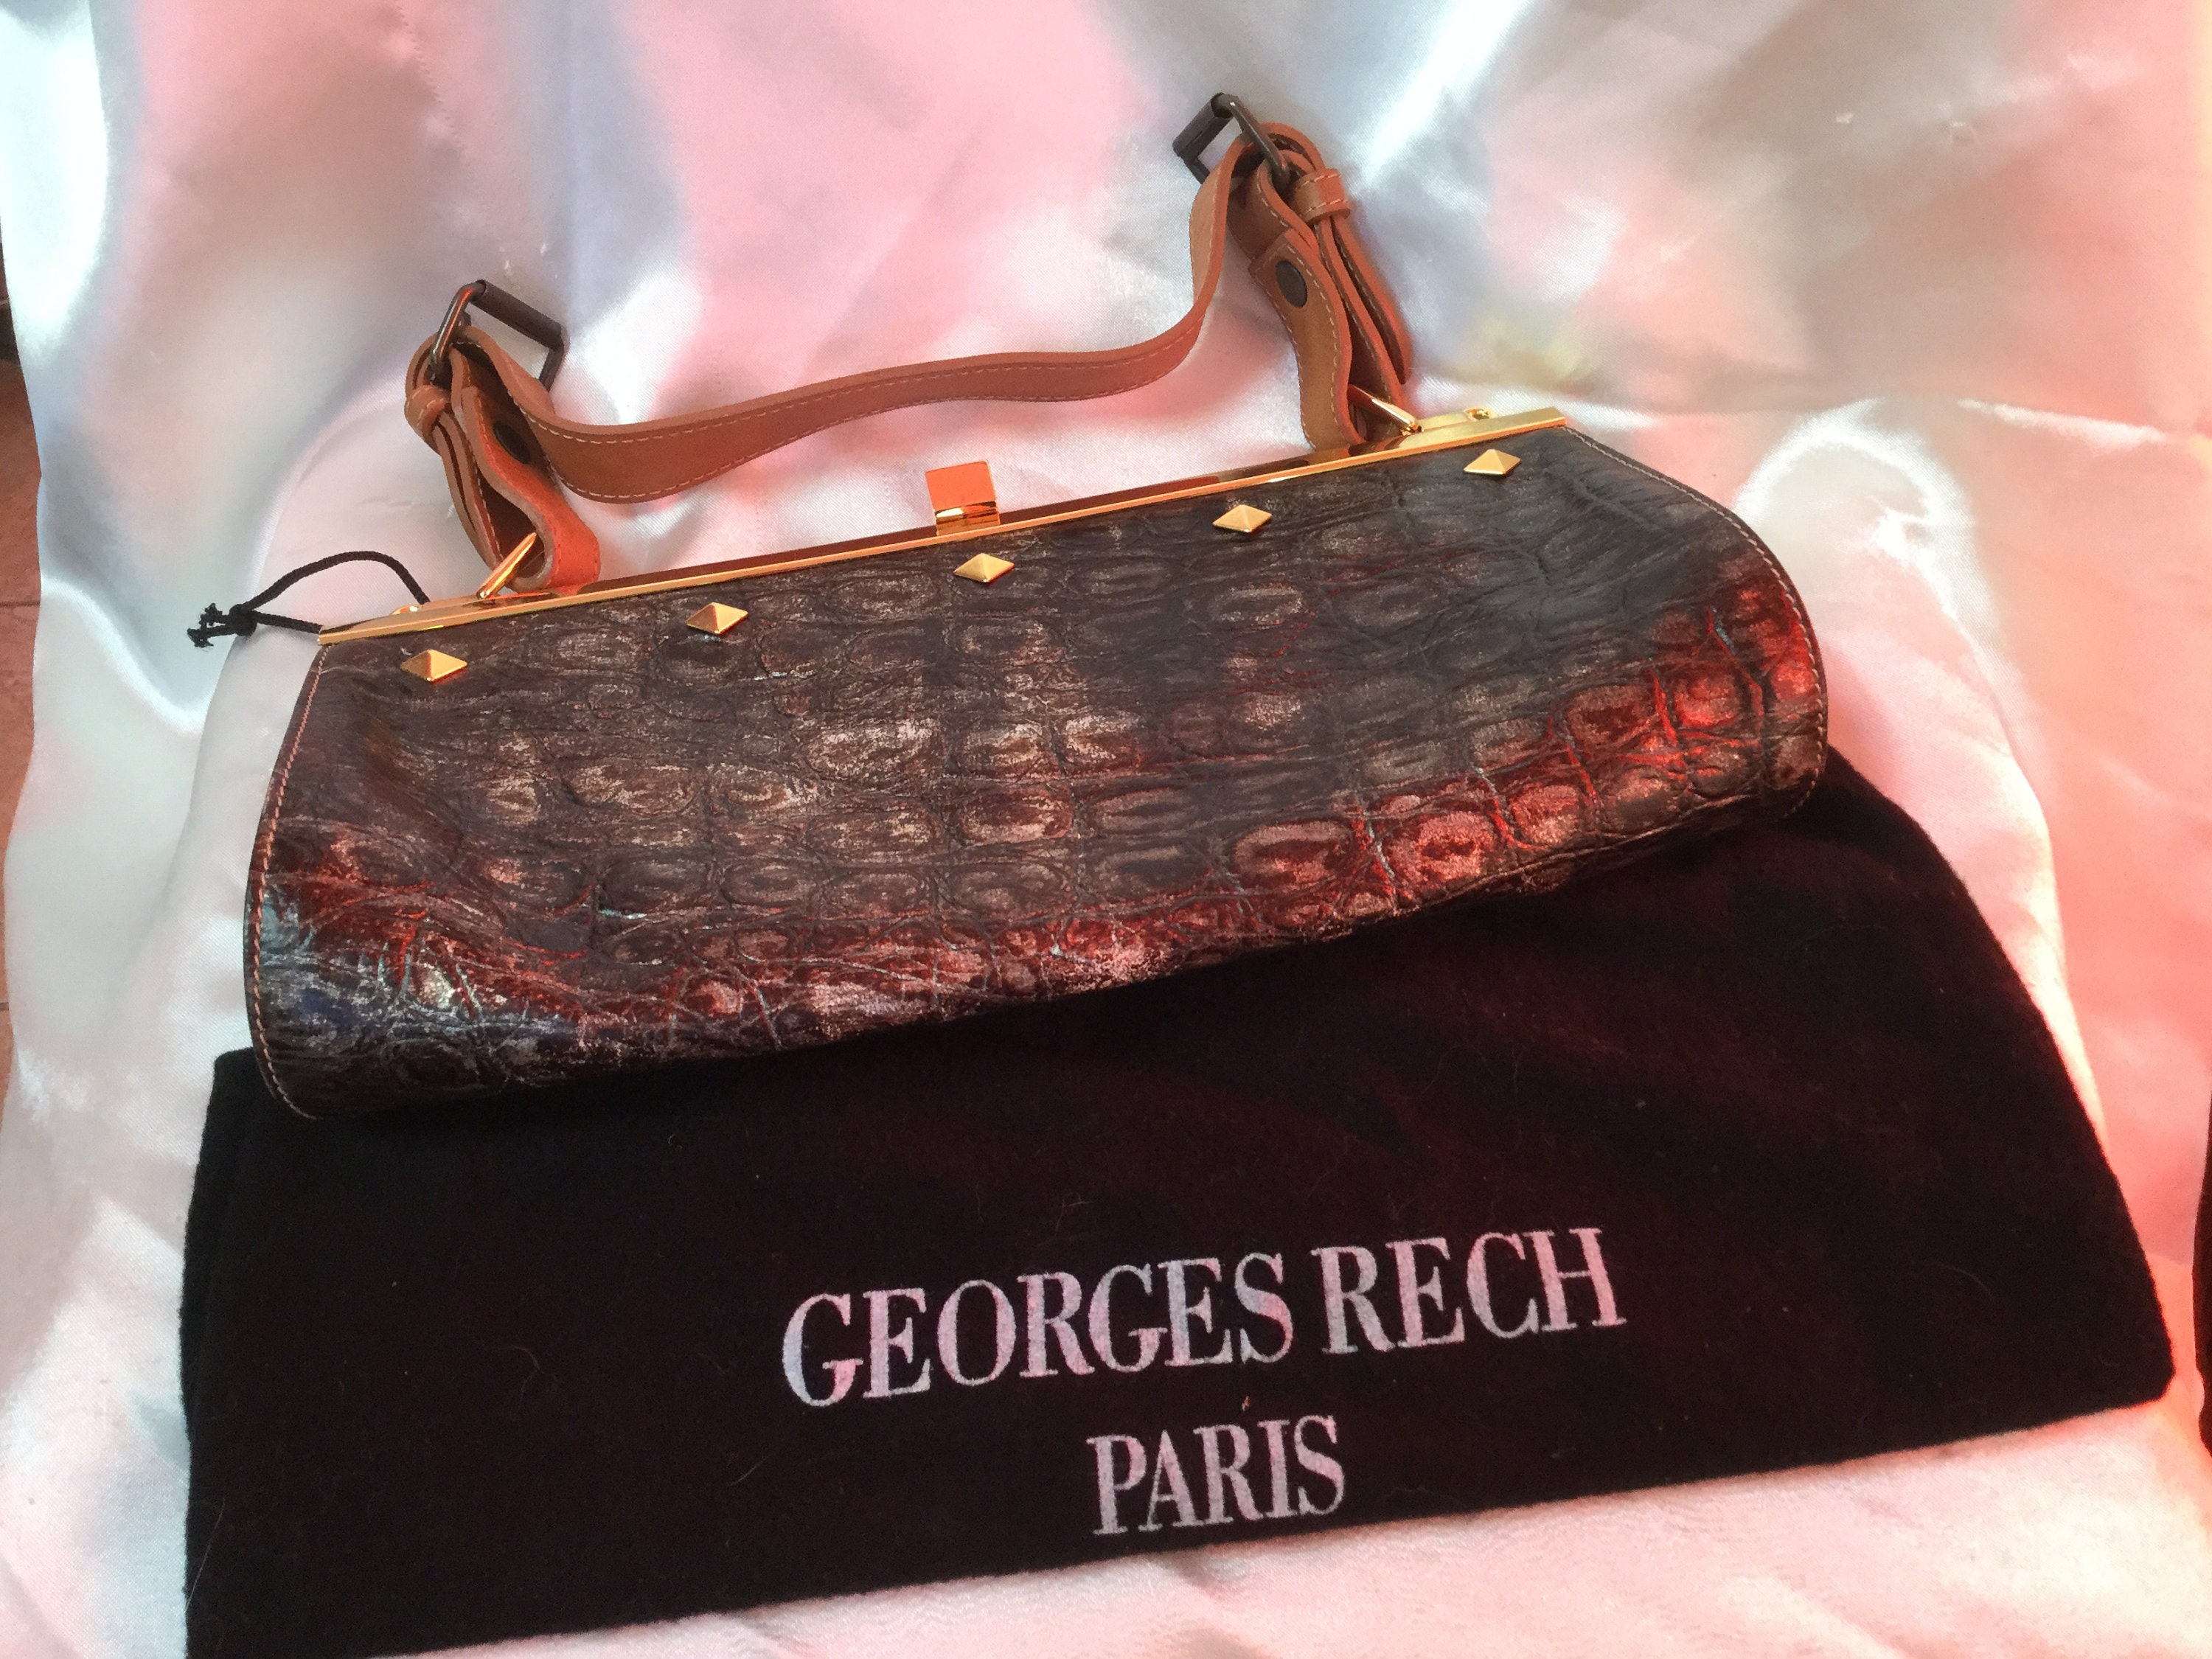 Georges Rech Paris Designer Bag With Original Dust Cover - Etsy